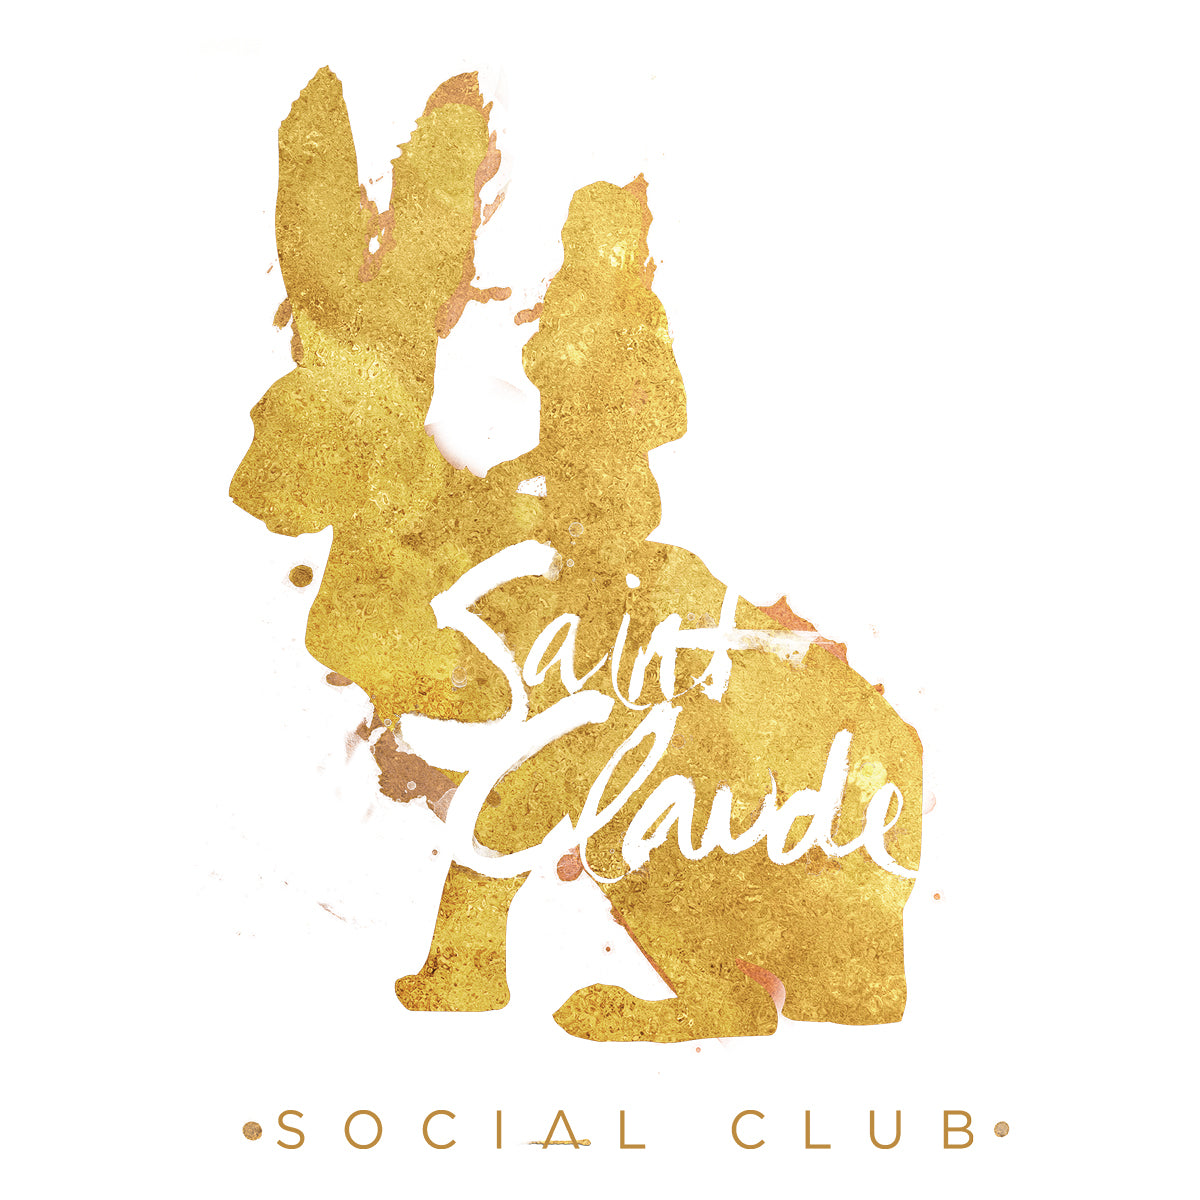 Saint Claude Social Club gift card with gold Saint Claude Rabbit emblem.